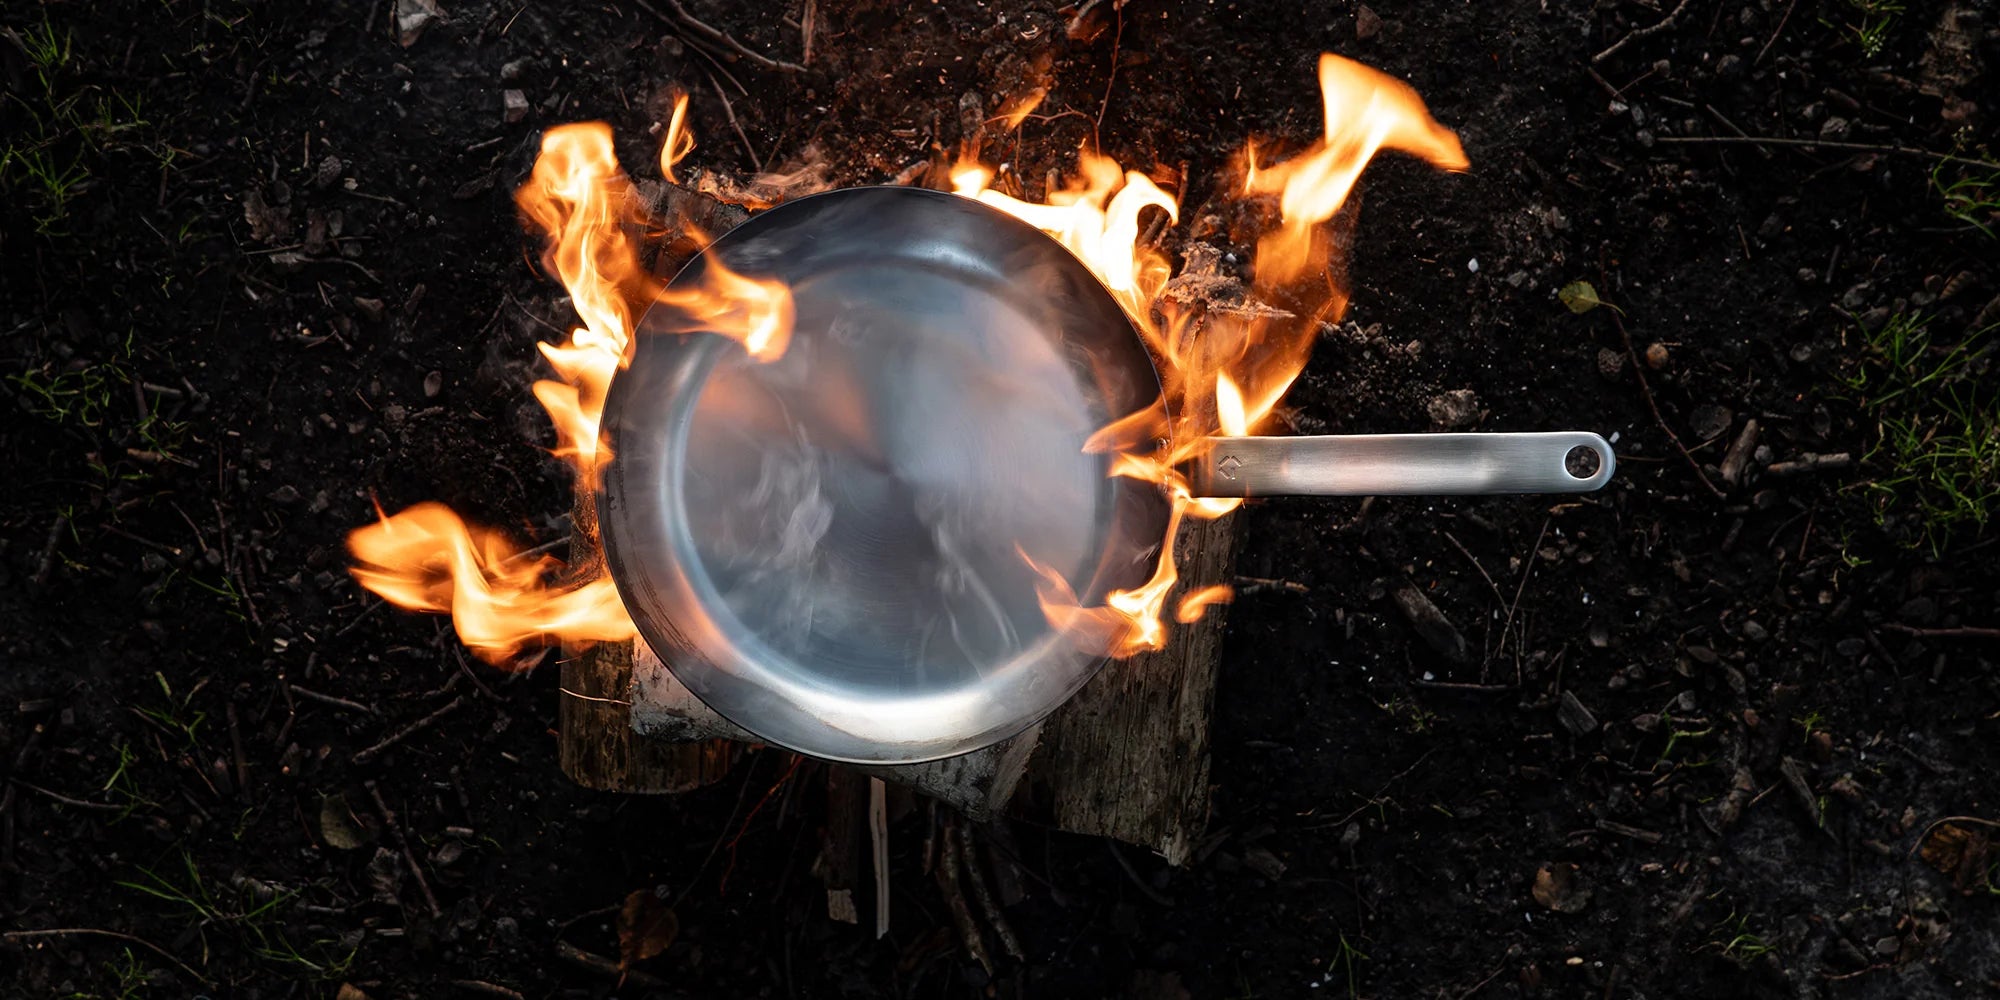 Carbon steel frying pan: The best pan for outdoor cooking